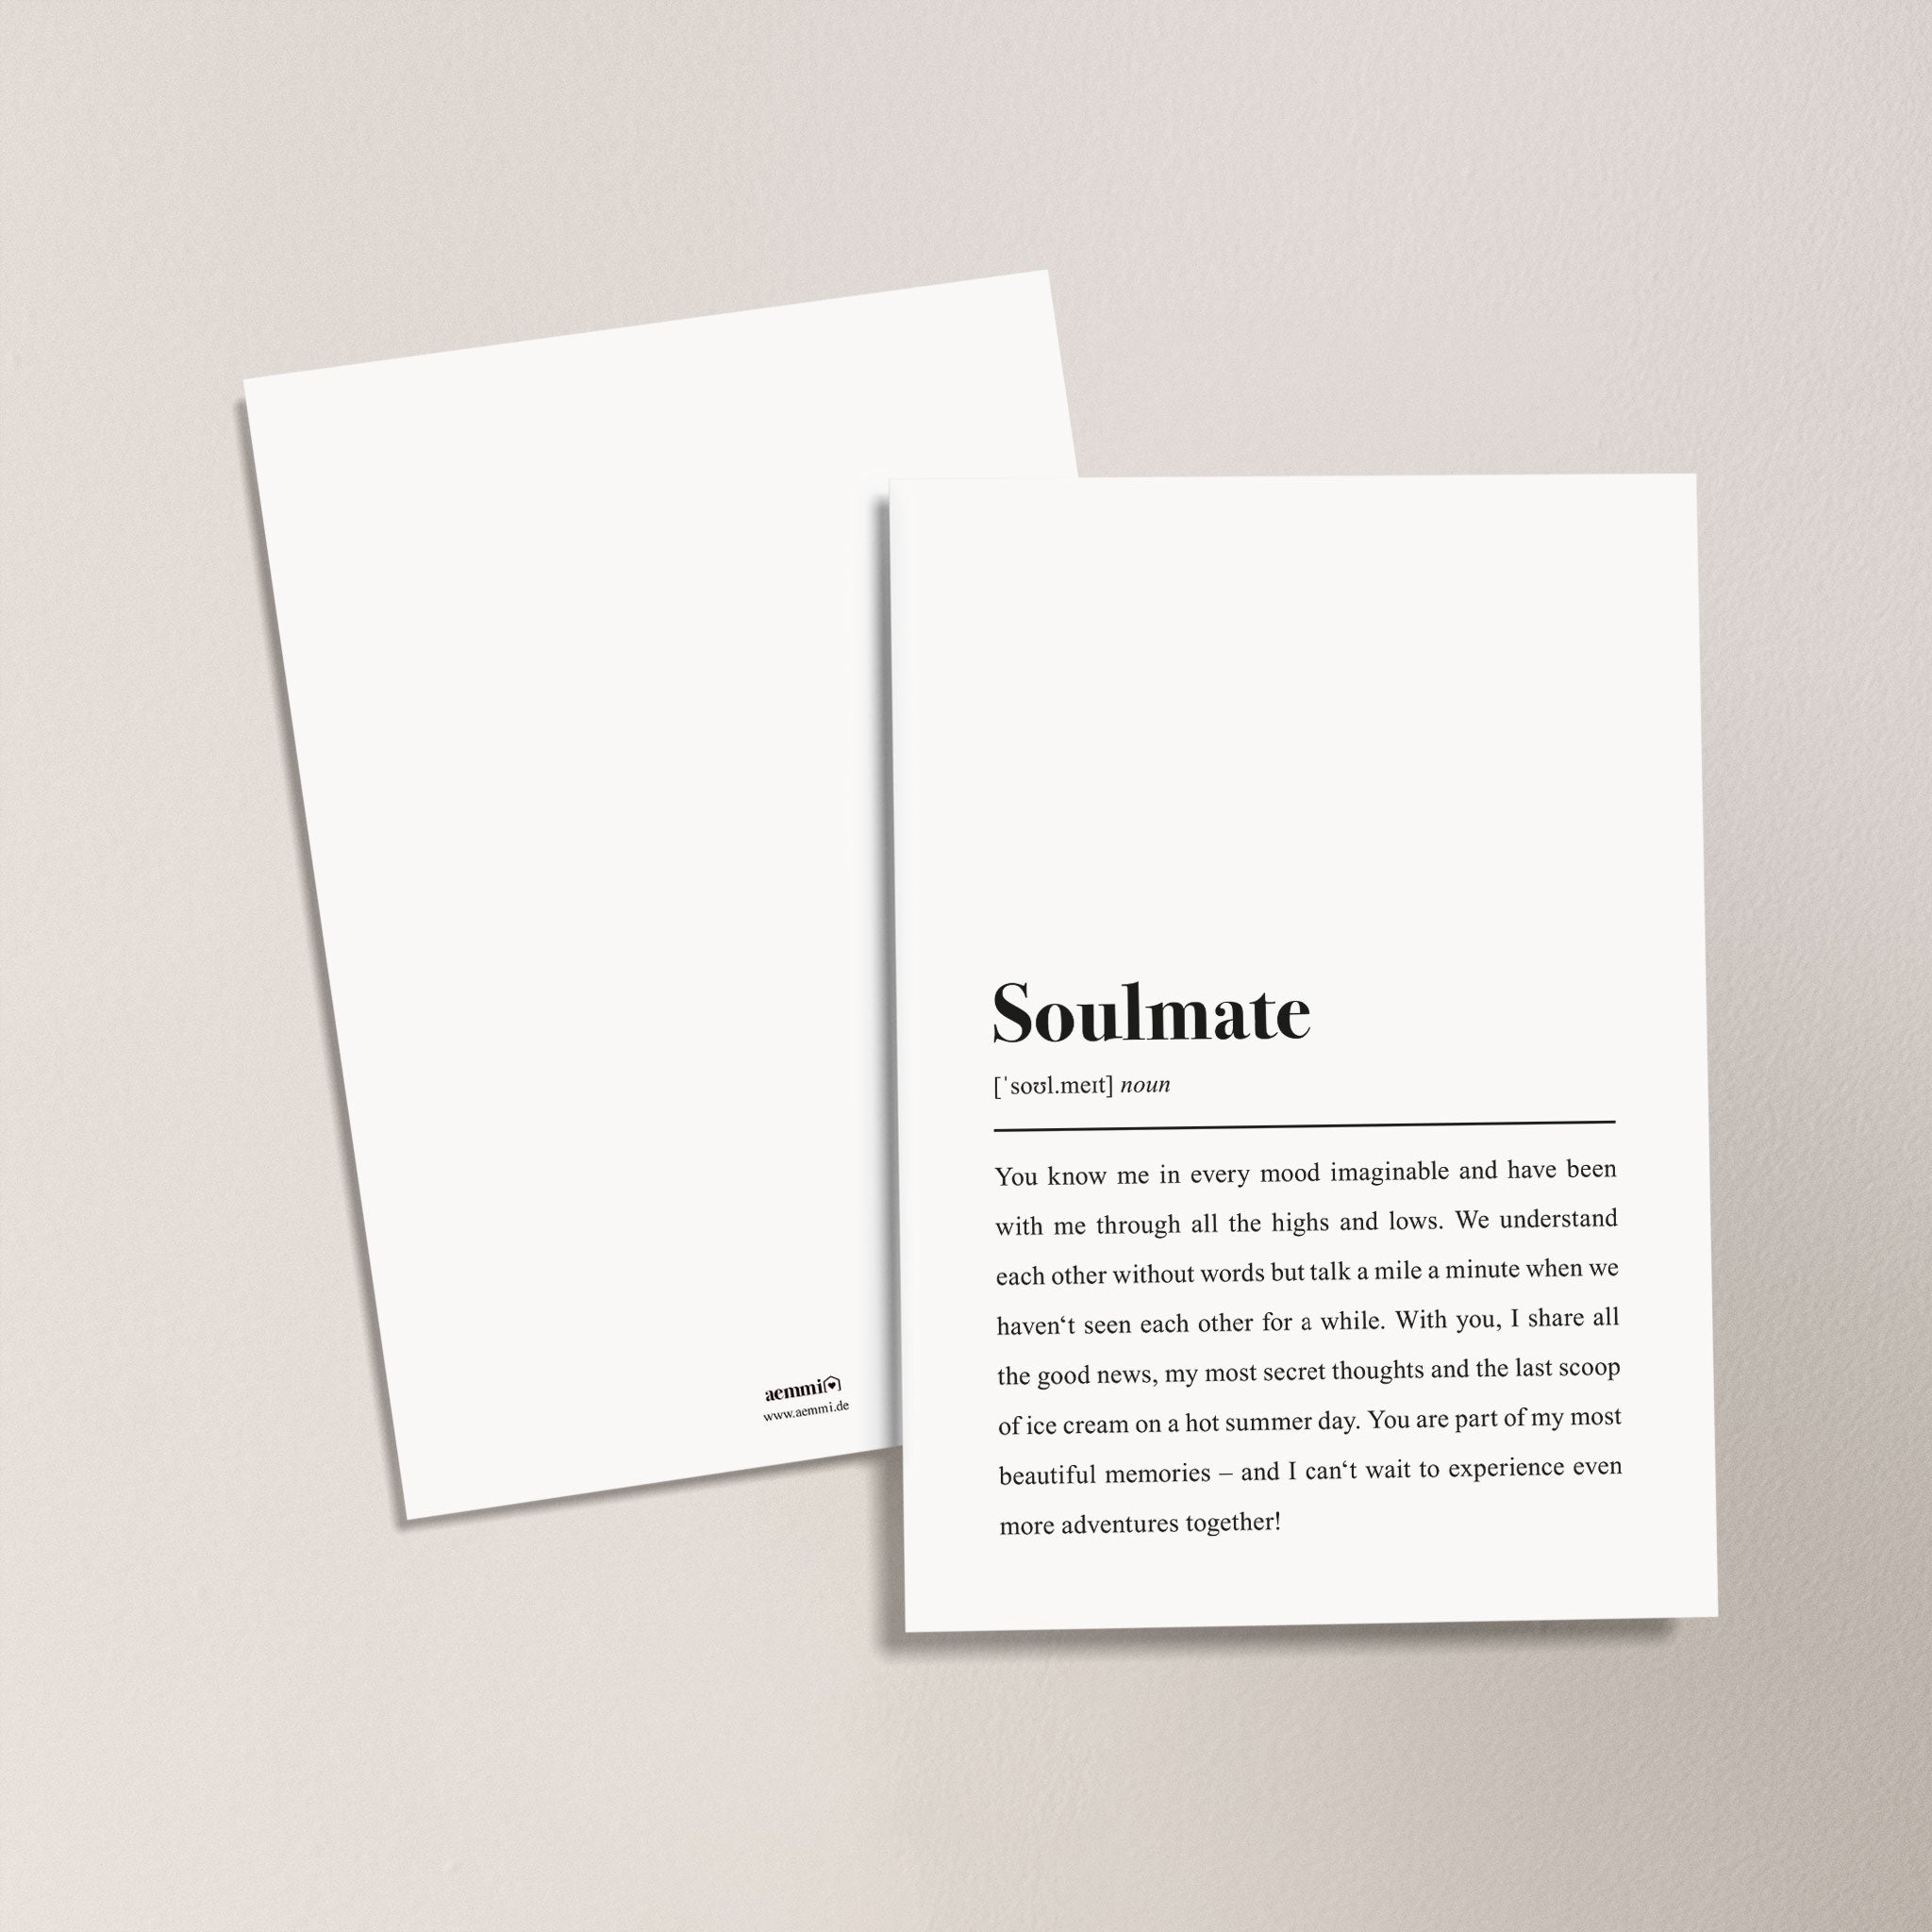 Soulmate Definition (Englisch): Postkarte